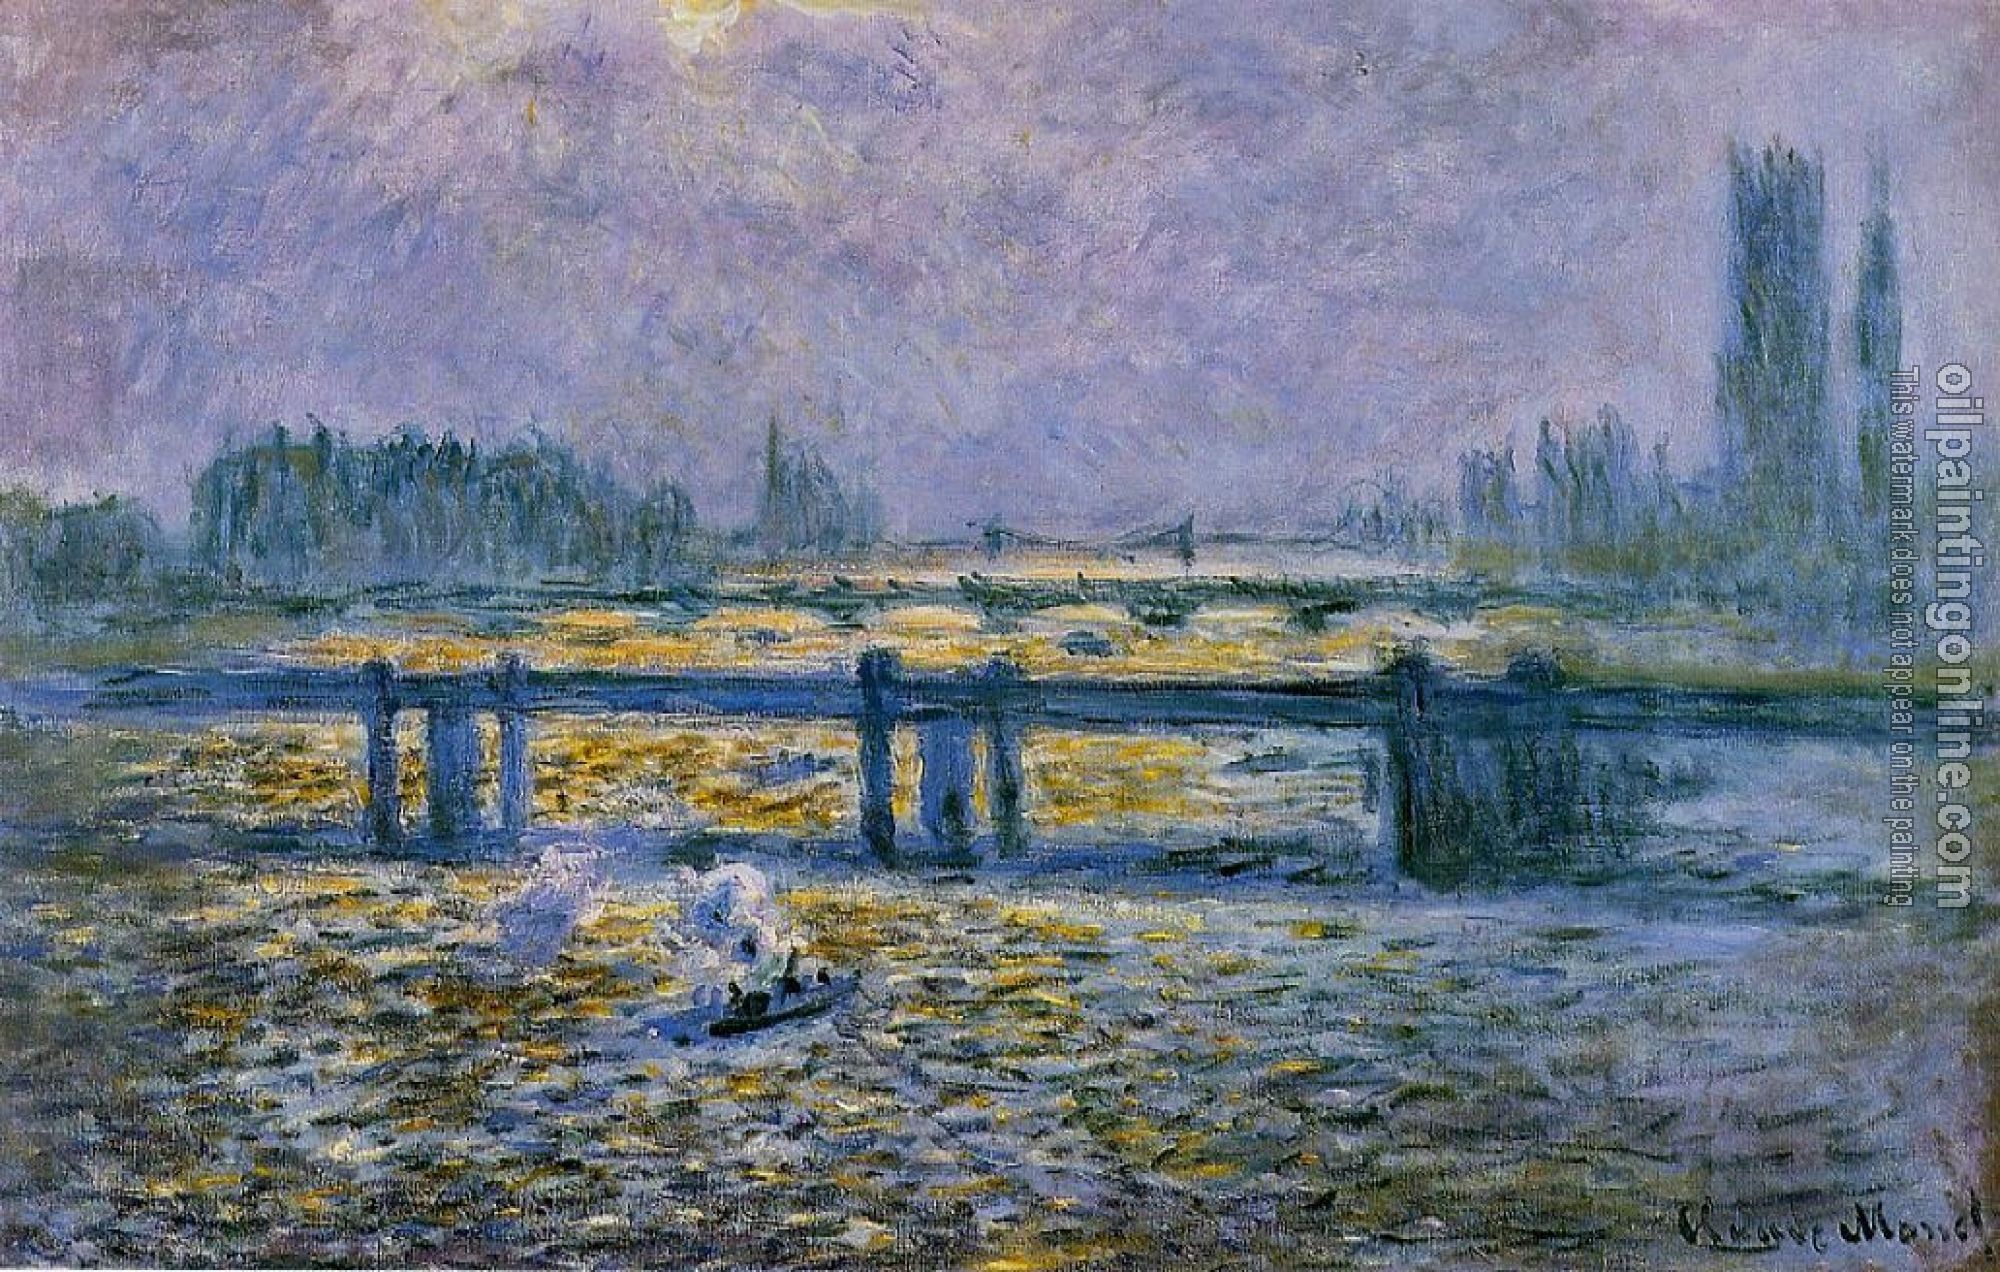 Monet, Claude Oscar - Charing Cross Bridge, Reflections on the Thames